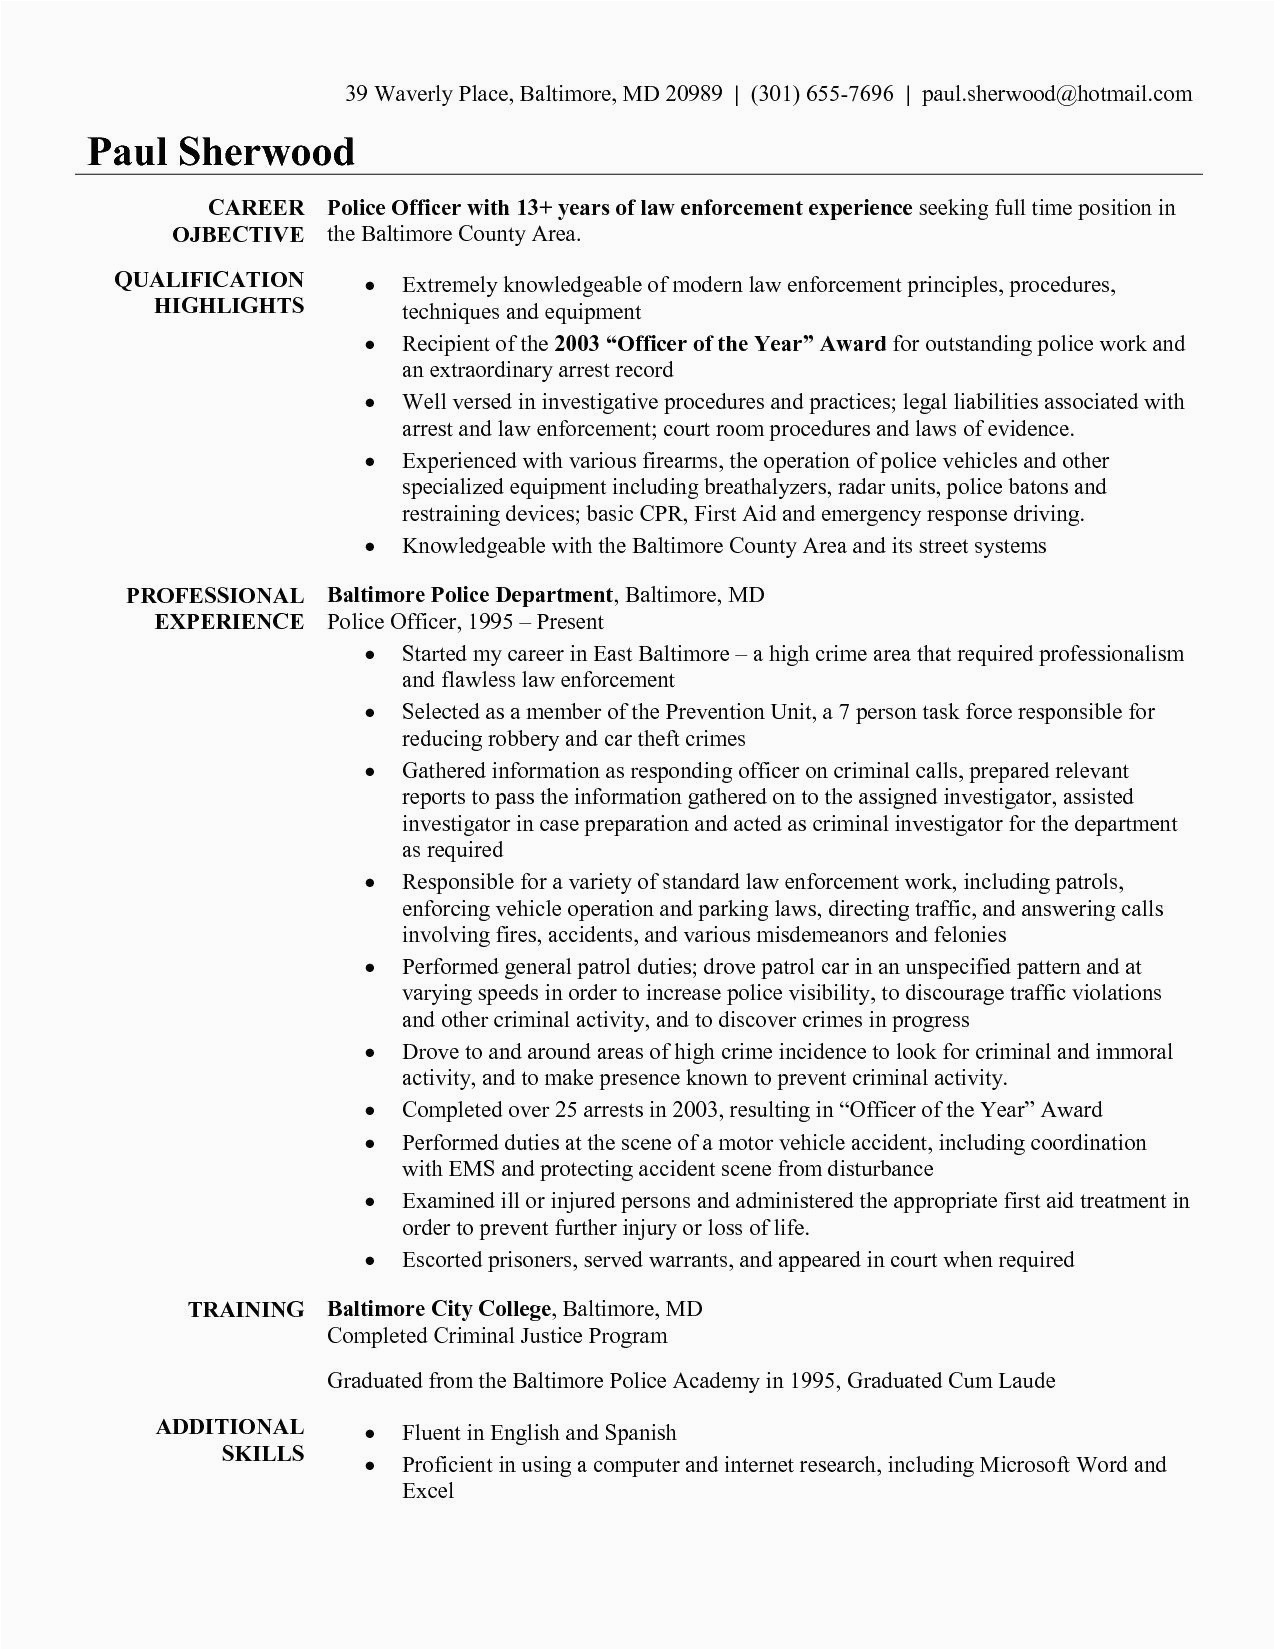 Sample Resume Objective for Law Enforcement Law Enforcement Resume Objective – Best Wallpaper